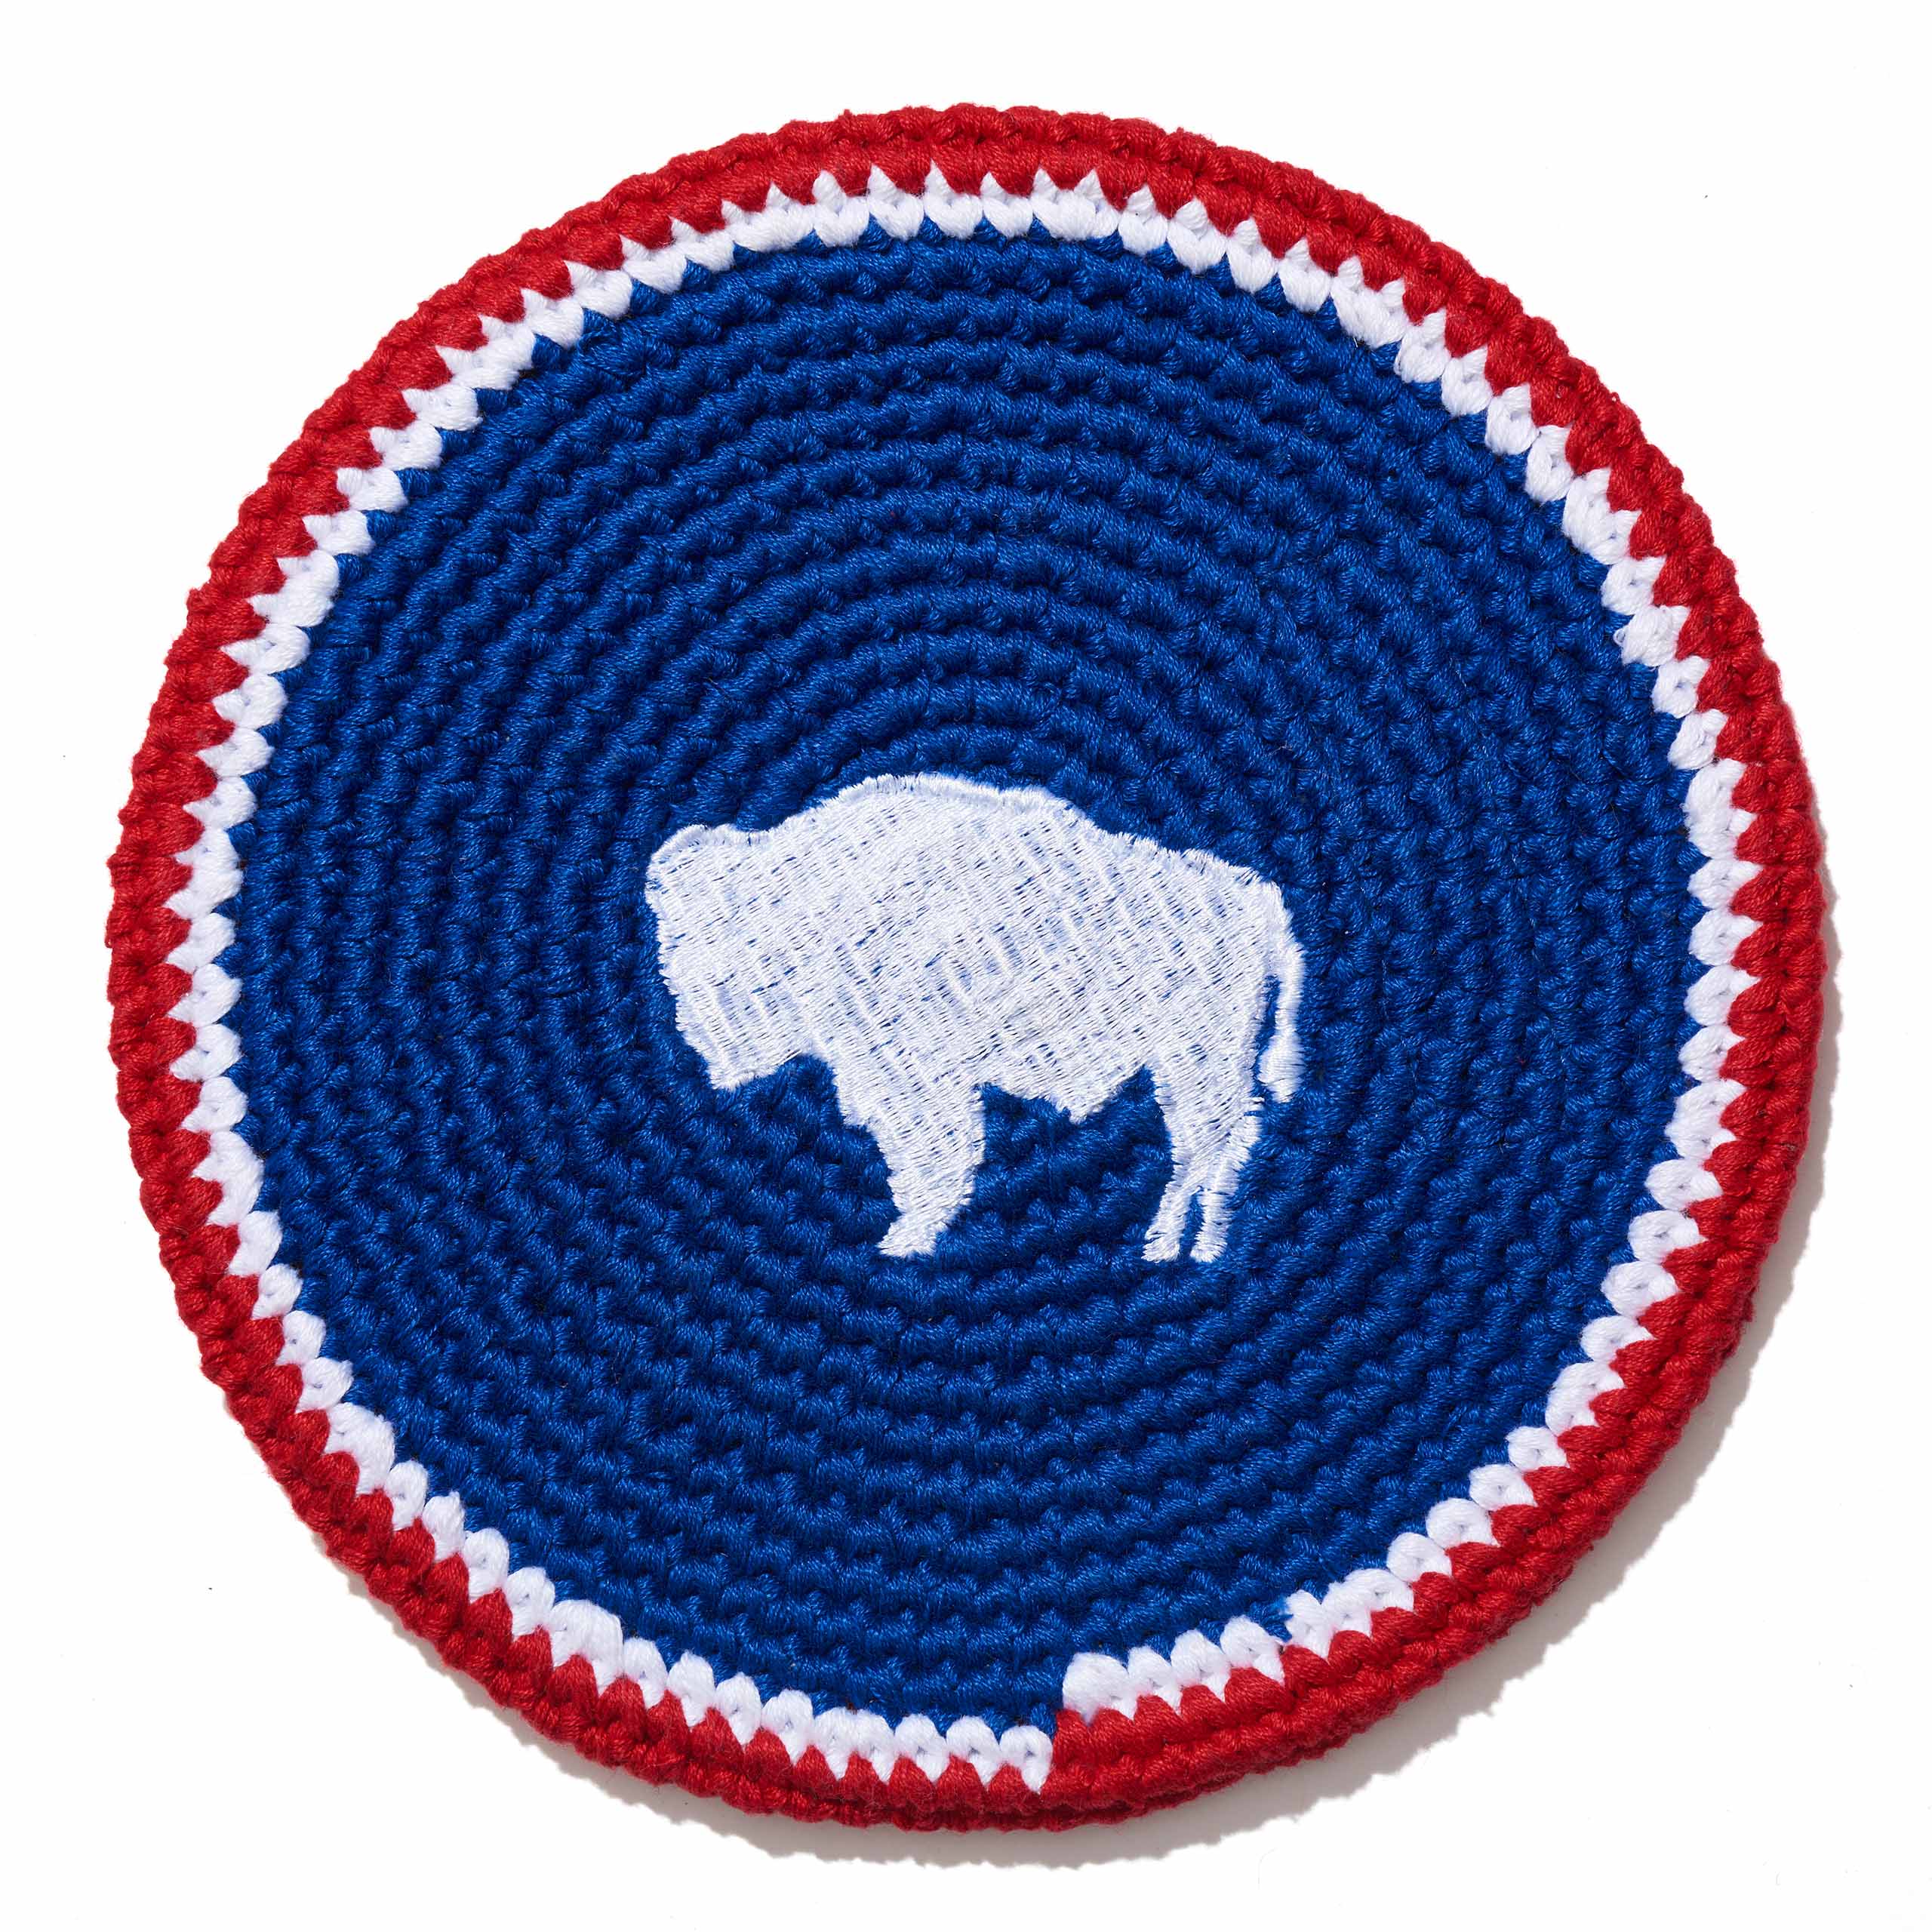 Wyoming Flag Disc Flag Disc Buena Onda Experience | Handmade, Fair Trade, Crochet, Knit, Cloth Toys, Indoor, Outdoor Games, Party, Backyard Games, Sports, Beach Lake Toys